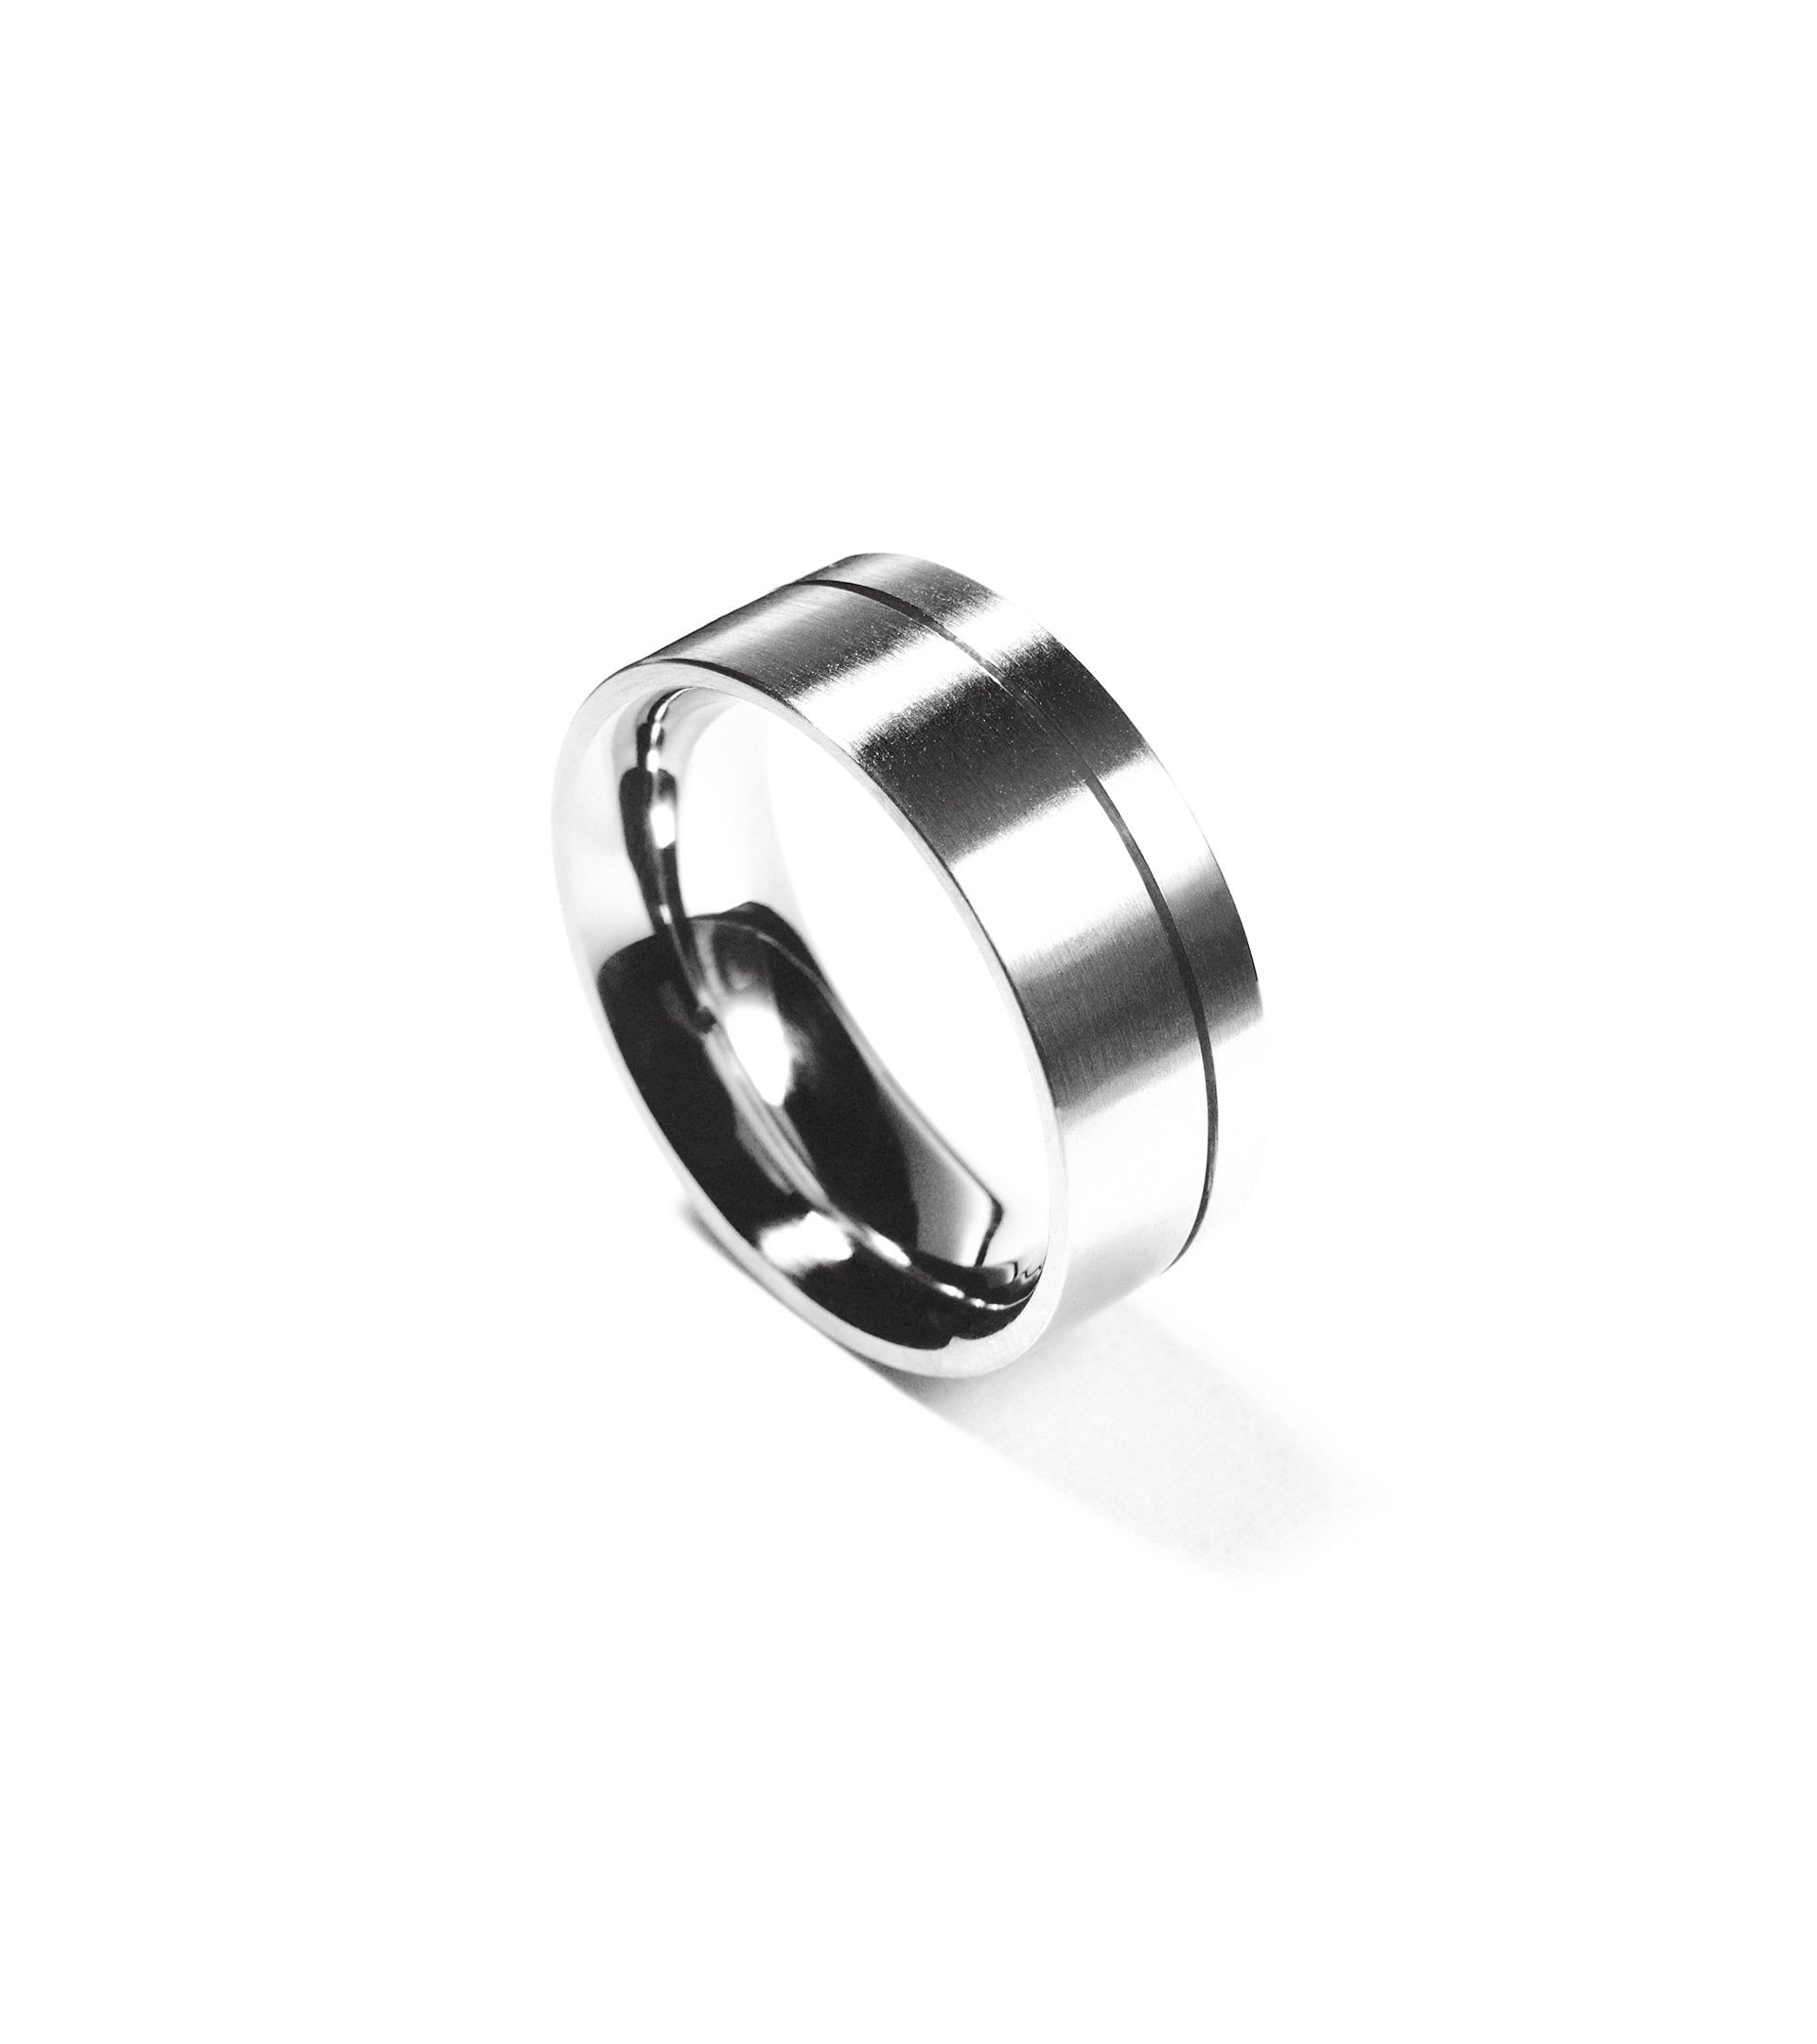 5mm Solid Platinum Dome Plain High Polish Men's Wedding Band Ring 8.9gm  12-12.75 | eBay